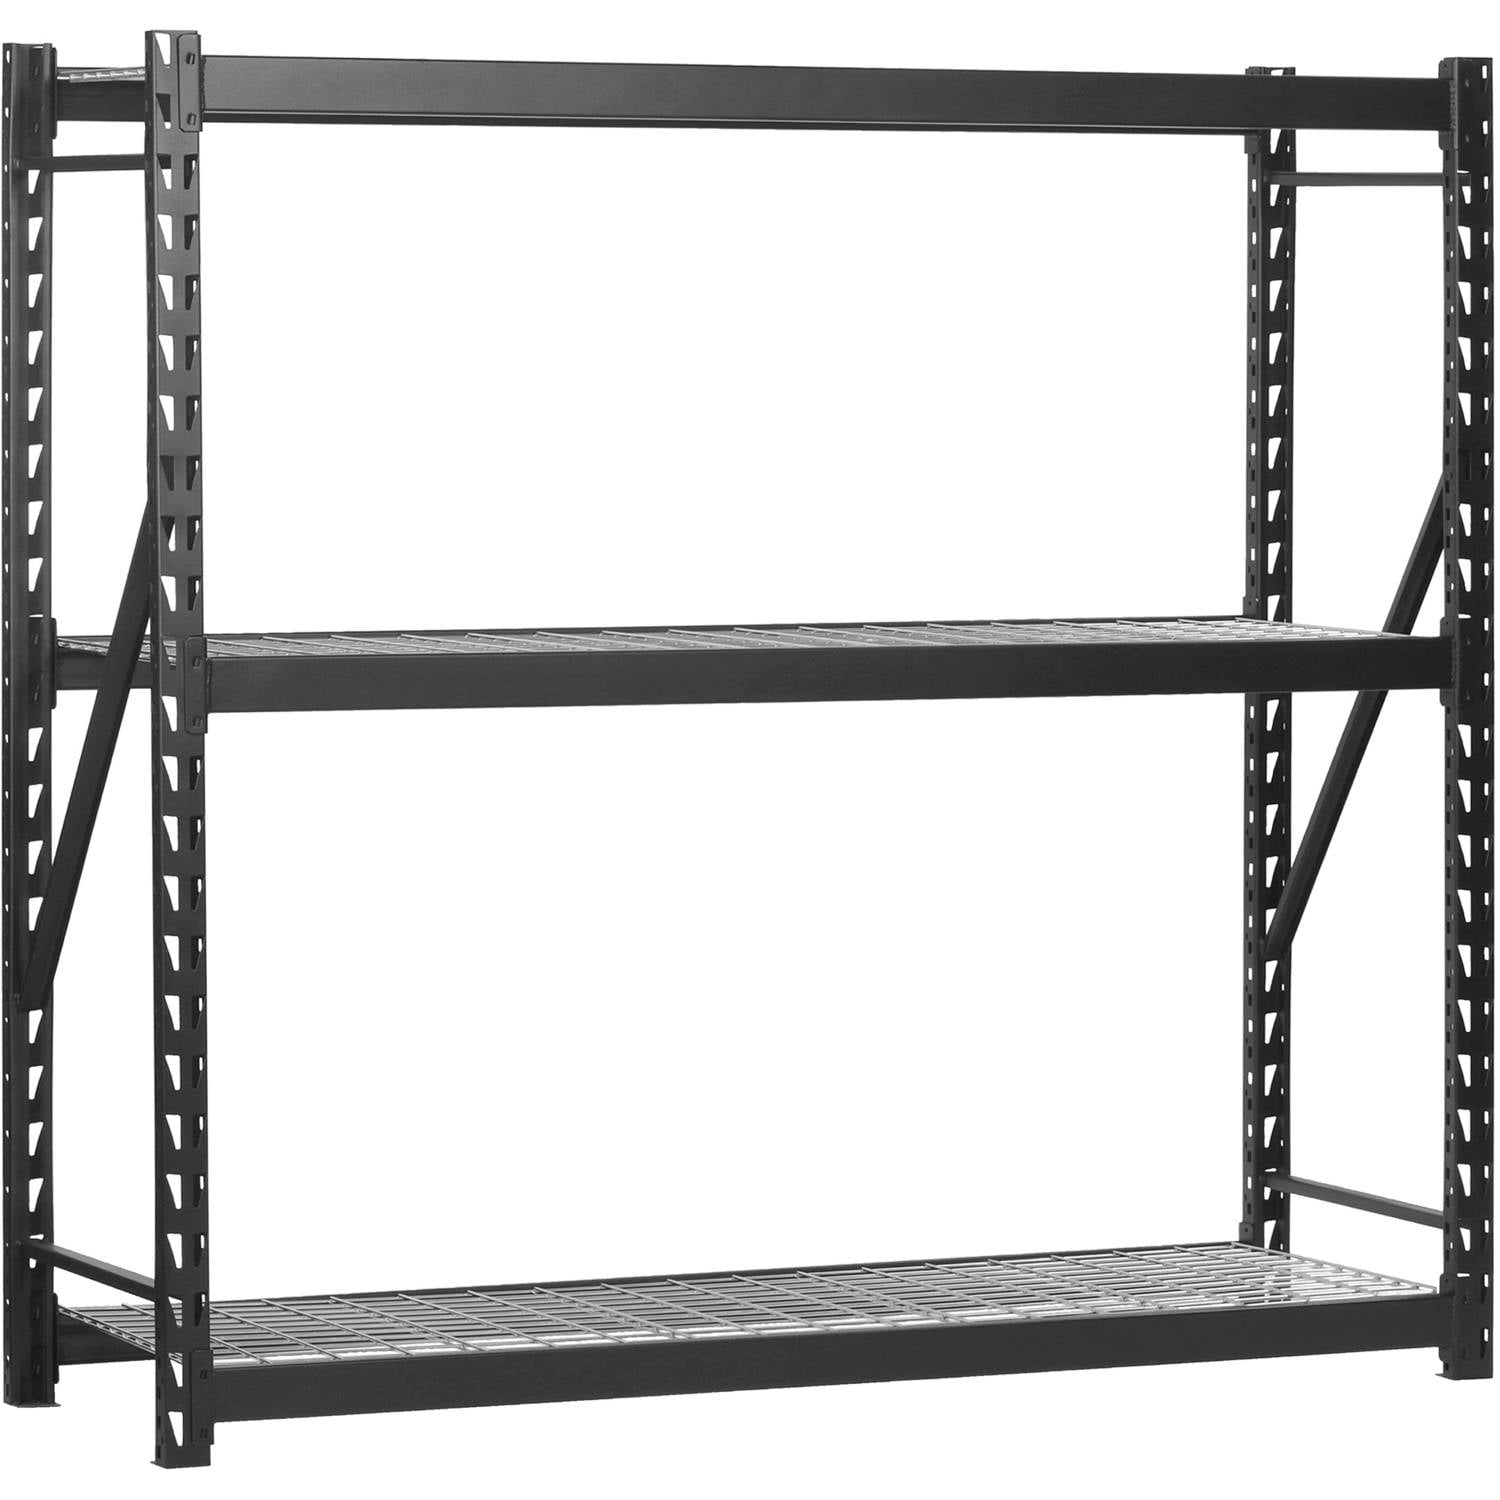 Steel Welded Storage Rack 150, Gladiator 77 Inch 4 Shelf Welded Steel Garage Shelving Unit